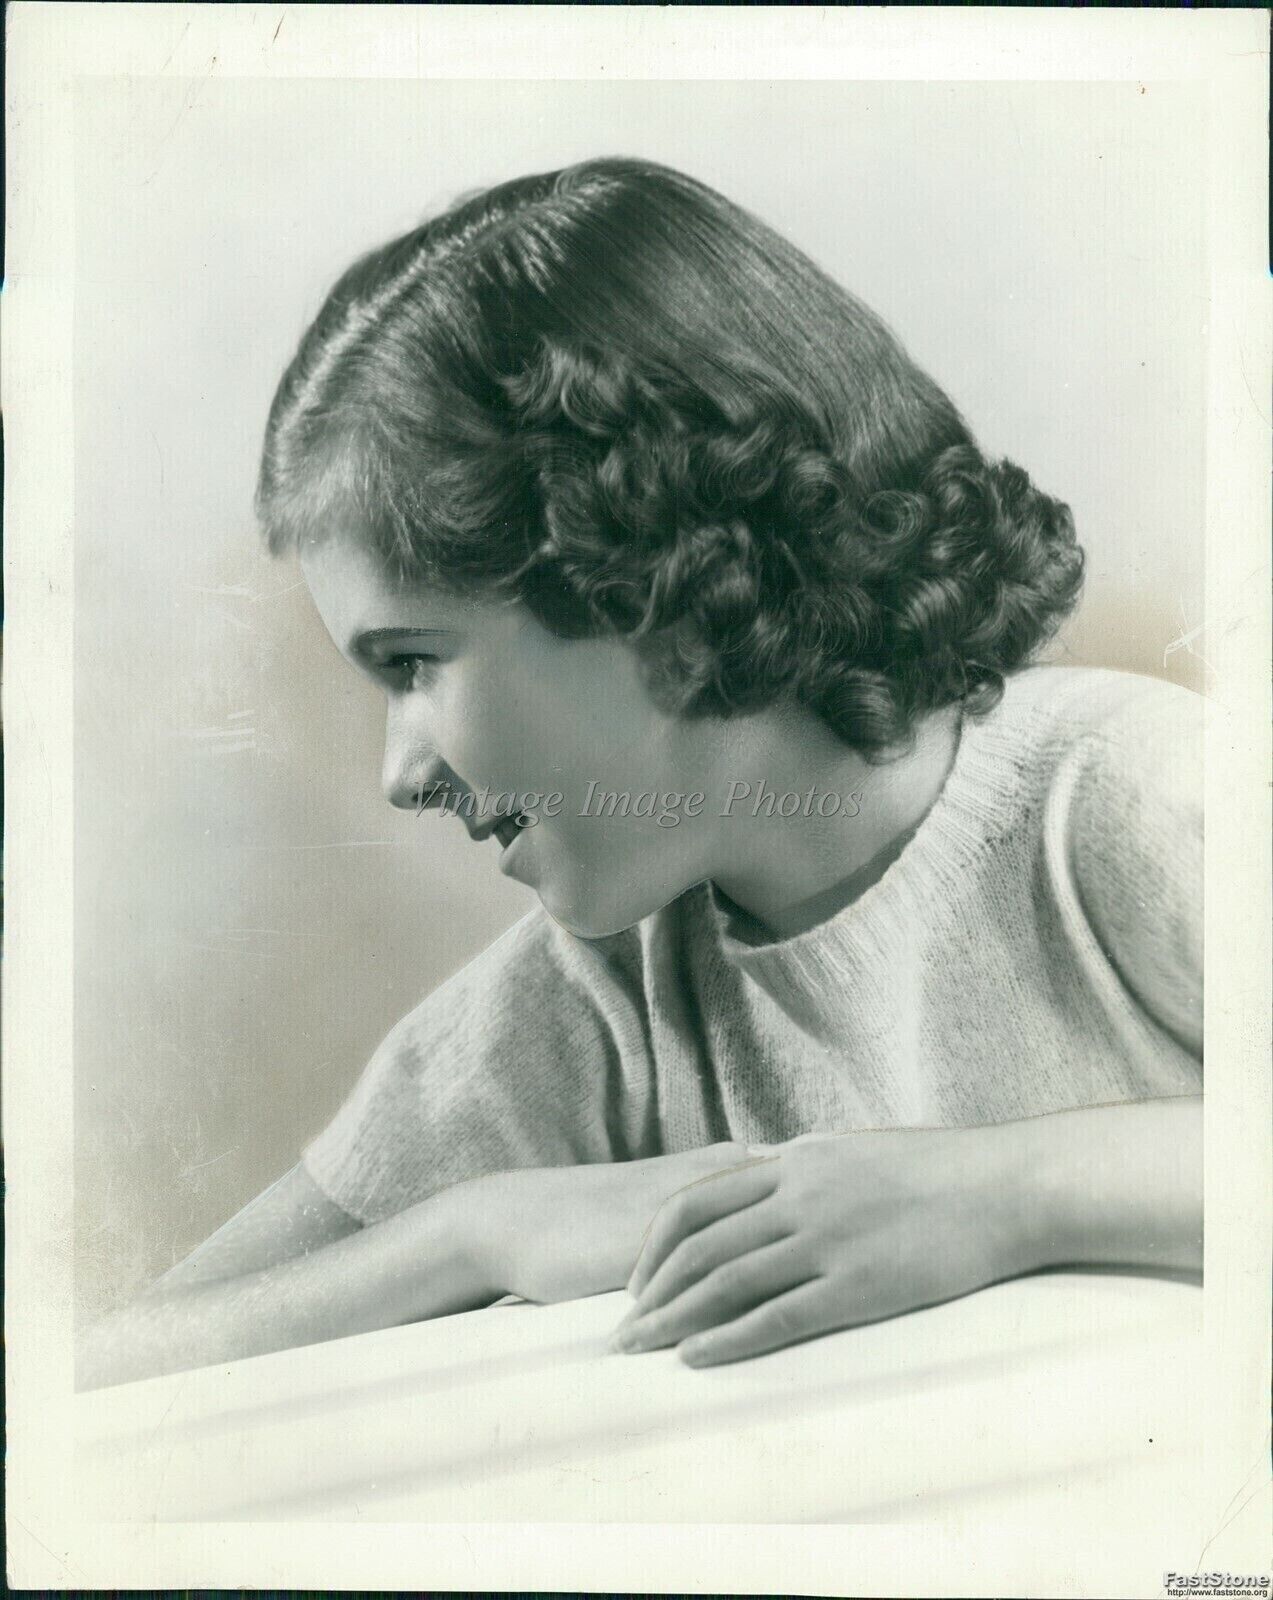 1940 Stylist Lura De Ges Recomends Ideal Little Girl Coiffure Fashion 8X10 Photo